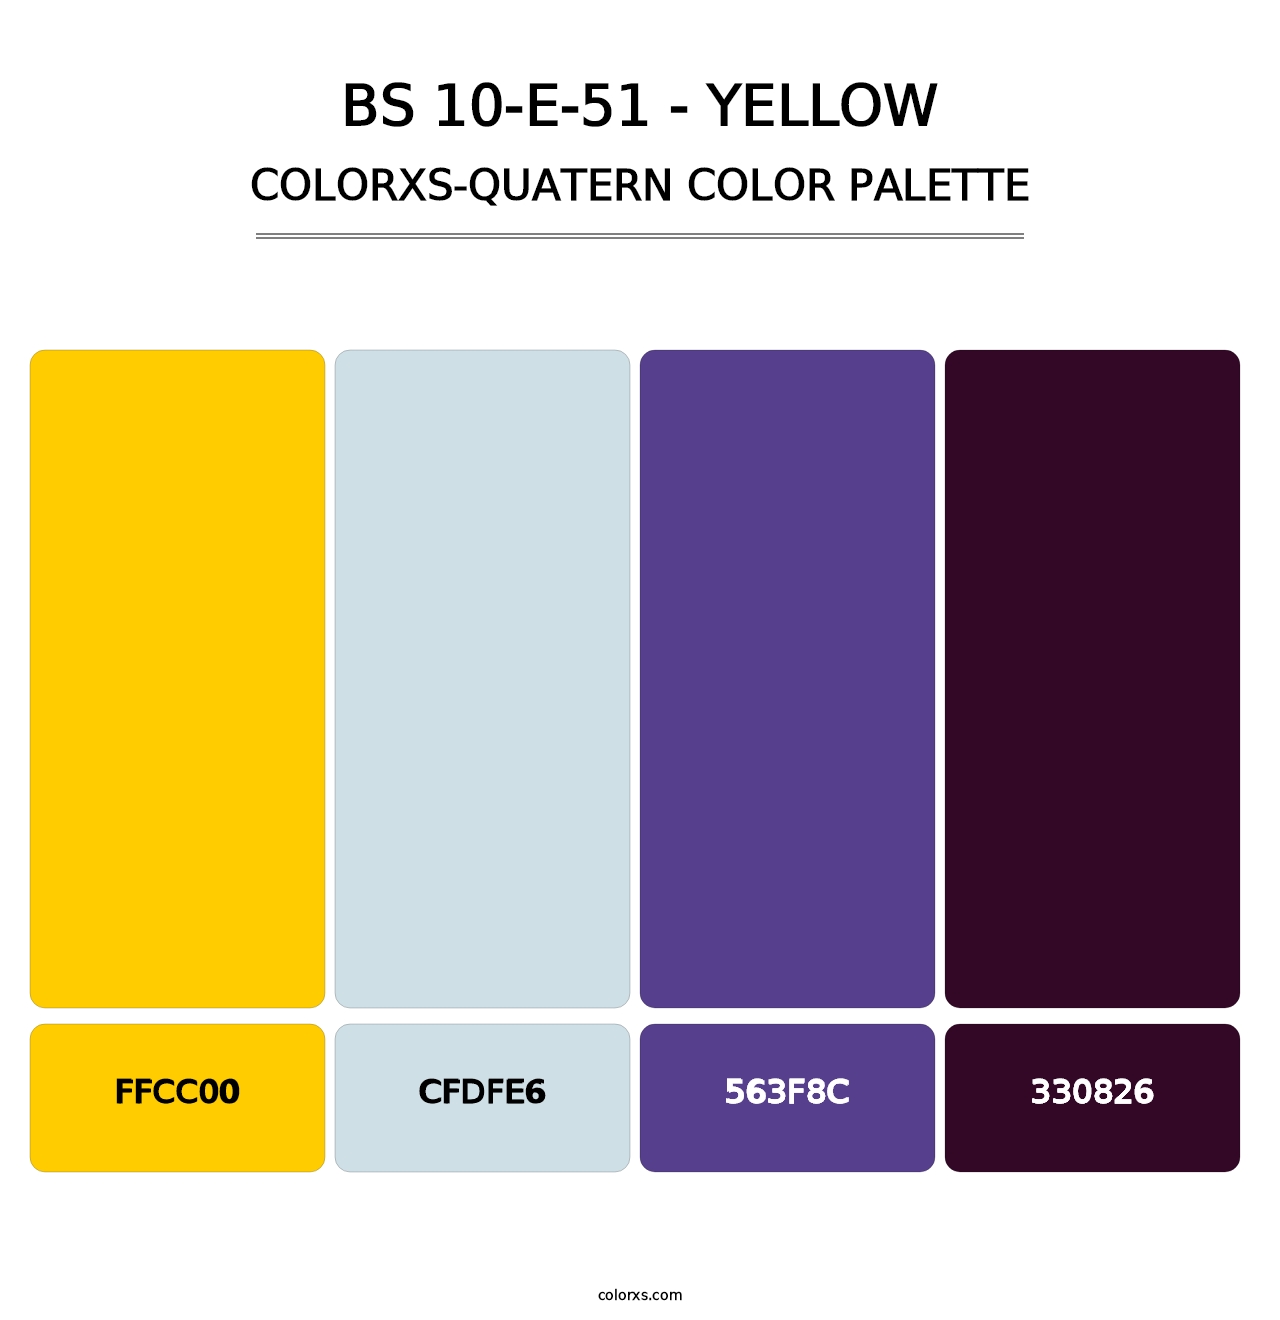 BS 10-E-51 - Yellow - Colorxs Quatern Palette